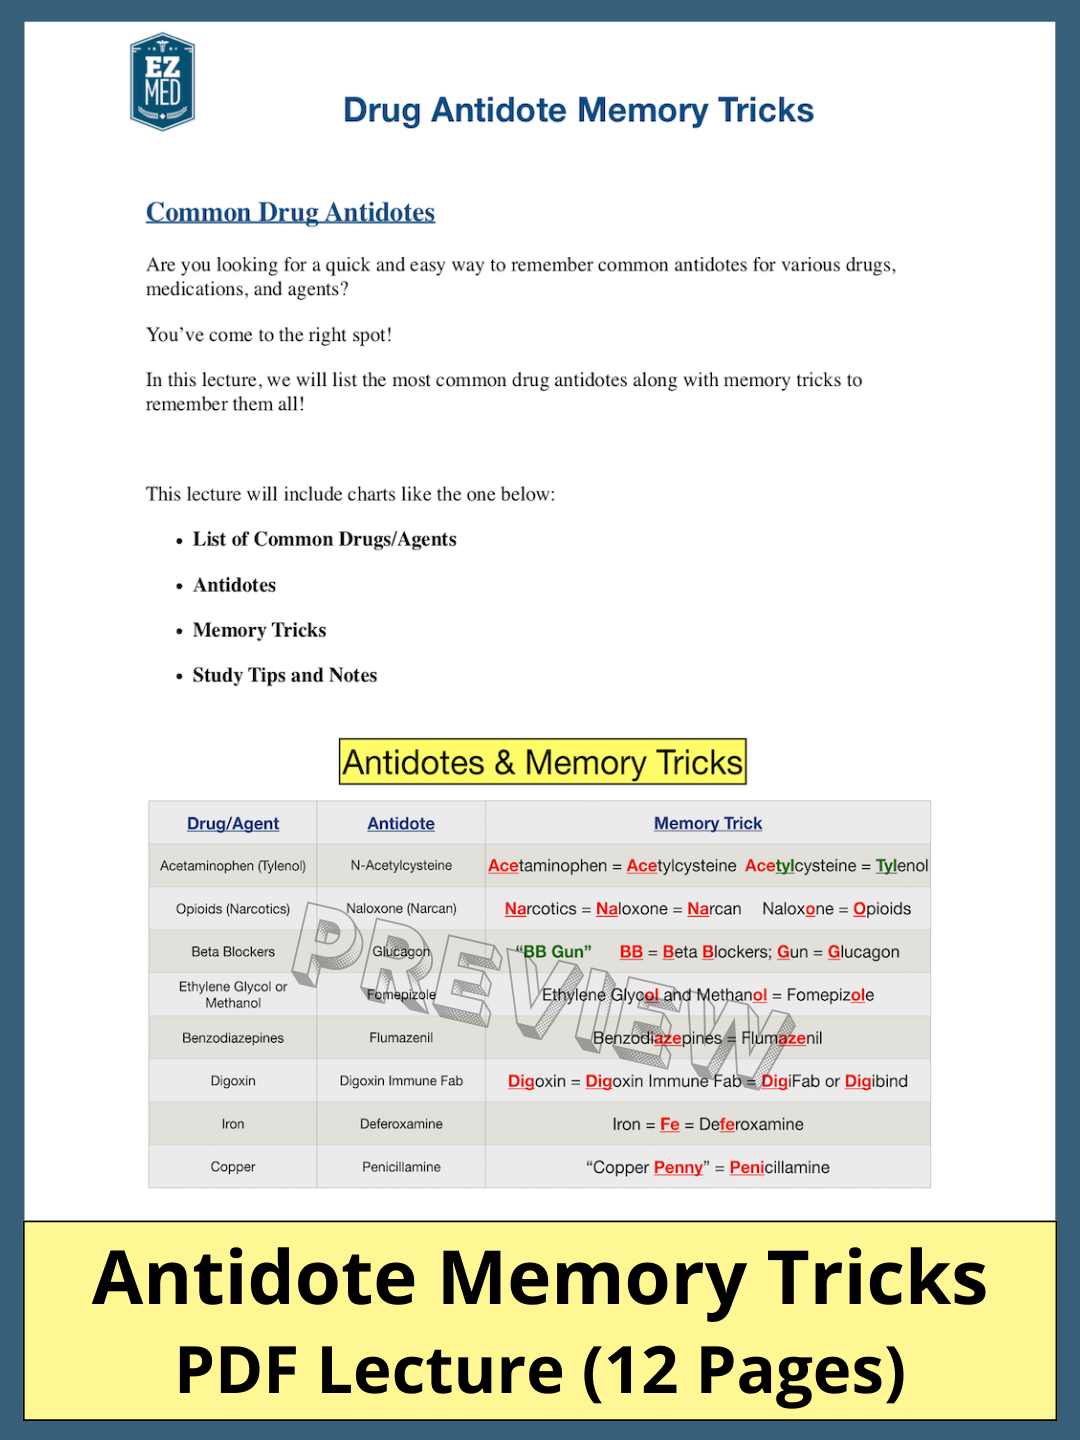 Antidote Memory Tricks [PDF Lecture]